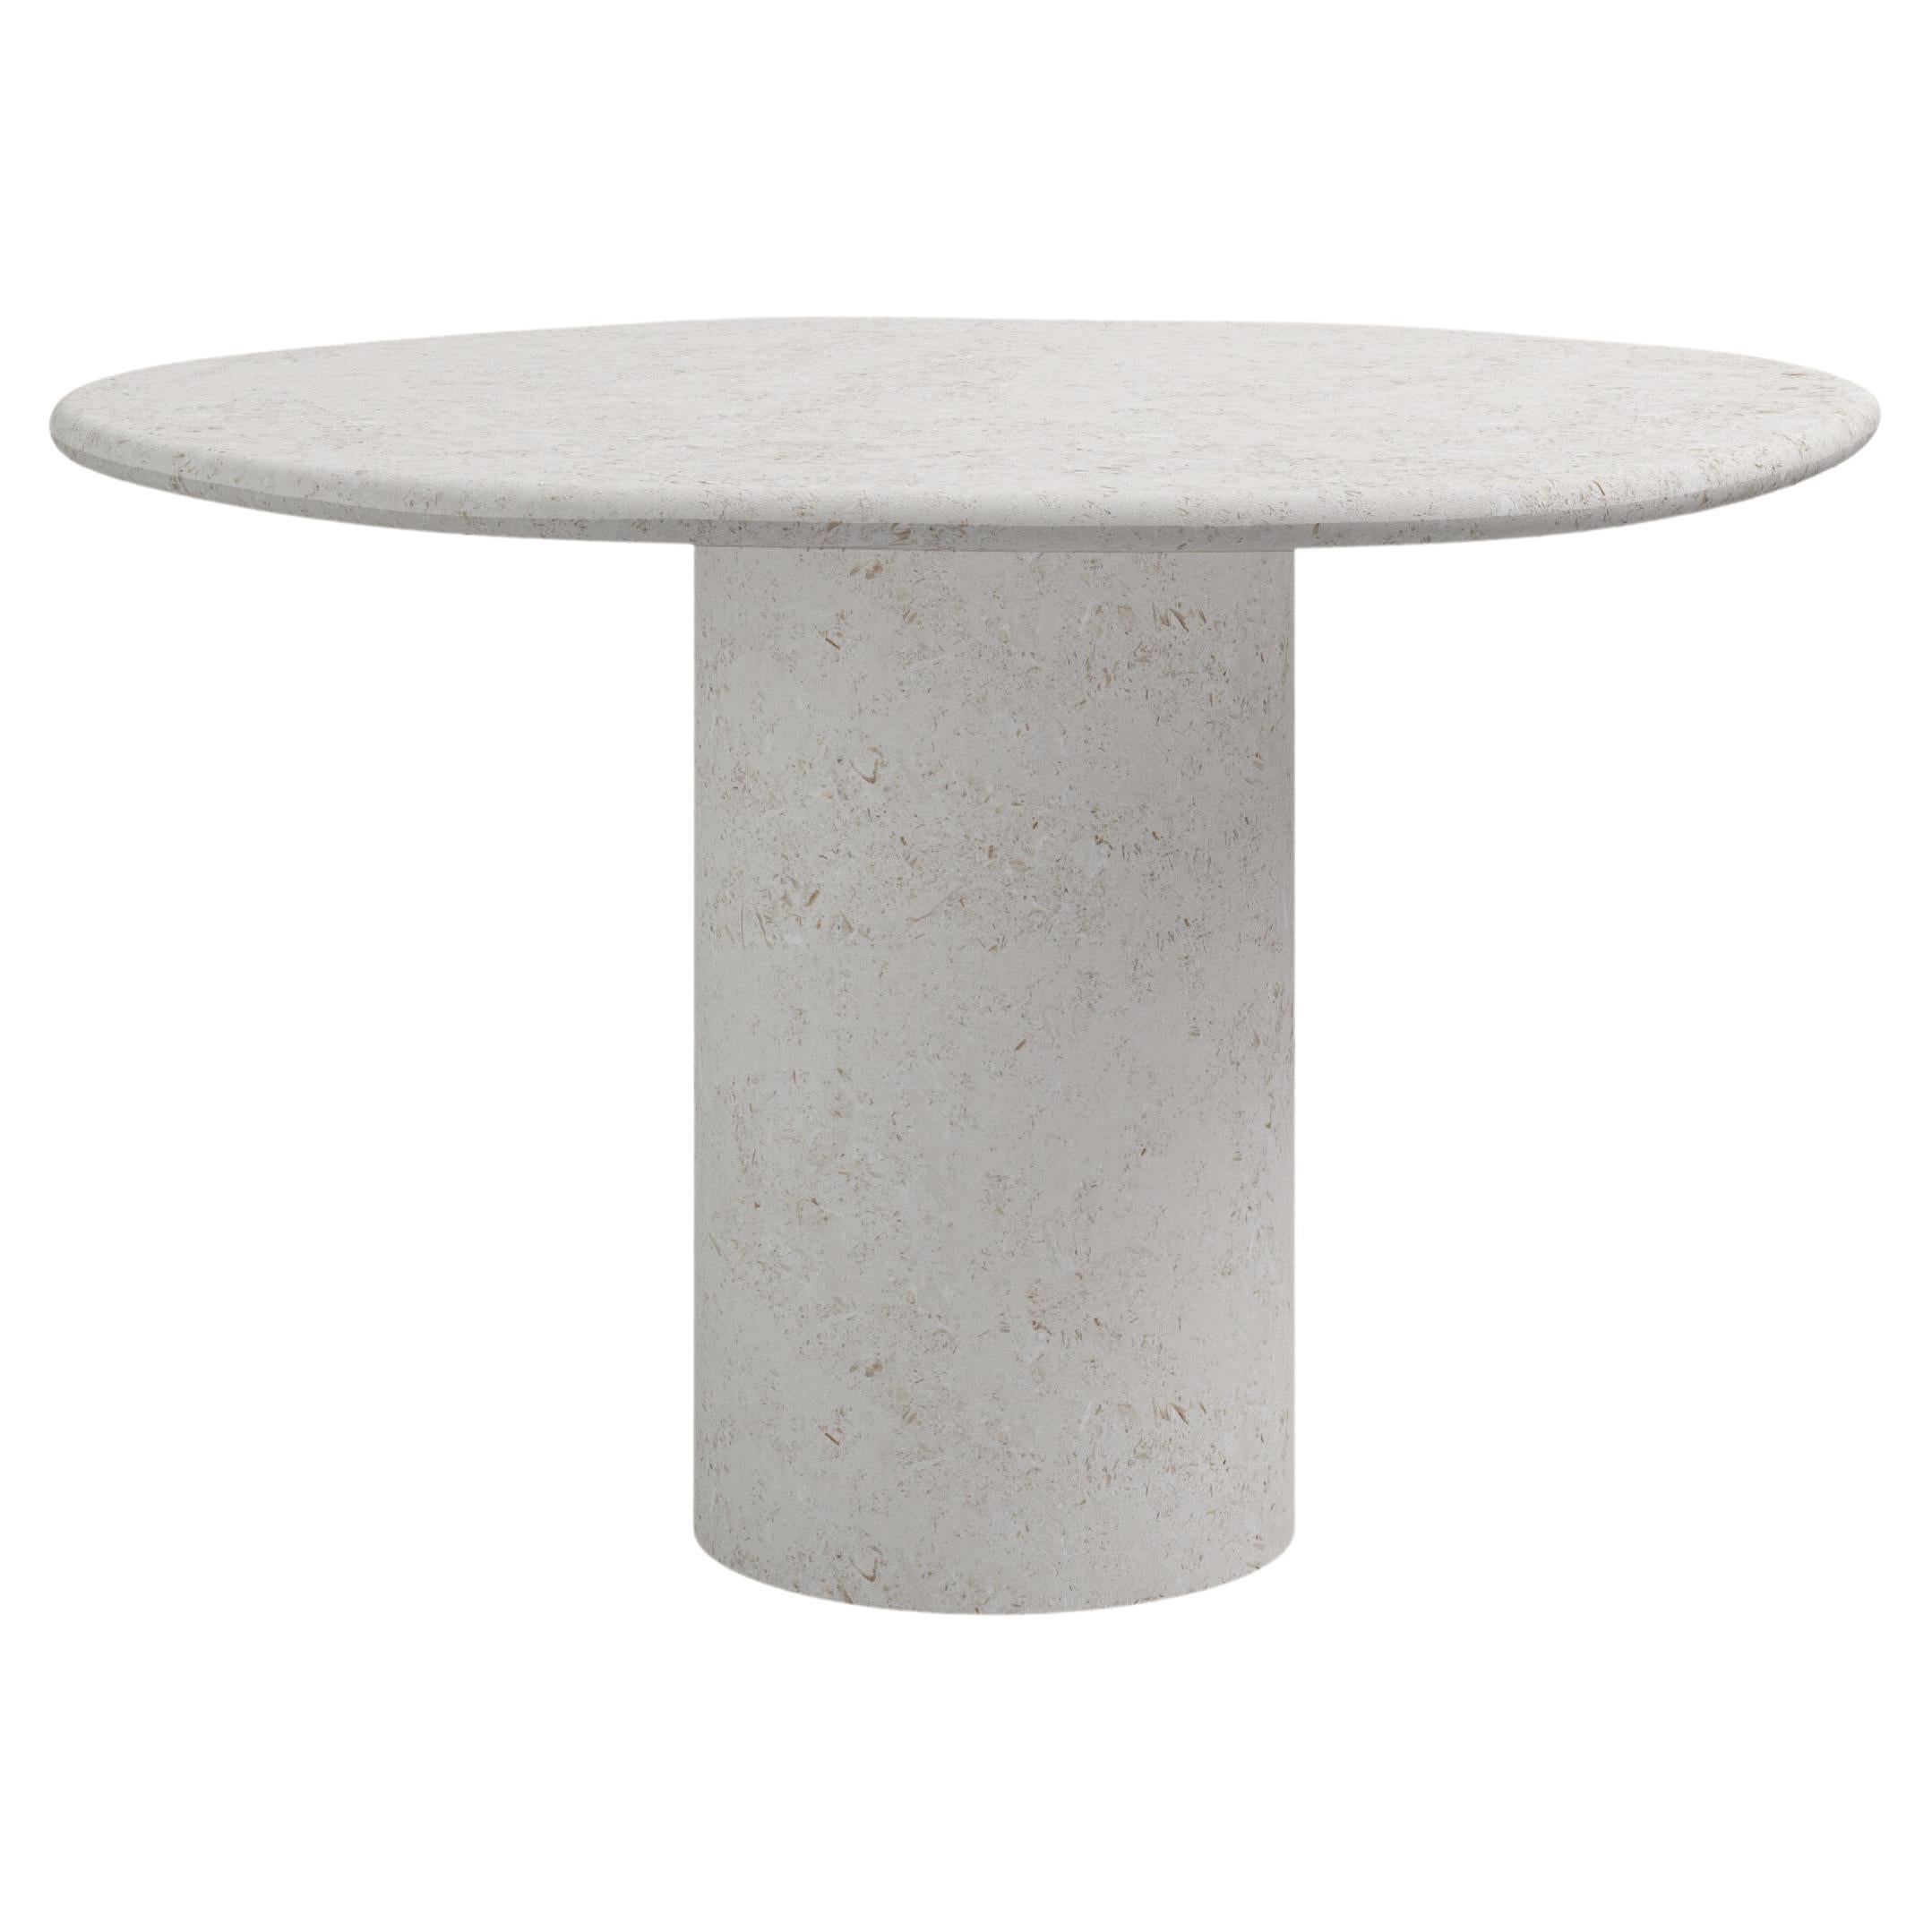 FORM(LA) Lago Round Dining Table 36”L x 36”W x 30”H Limestone Oceano For Sale